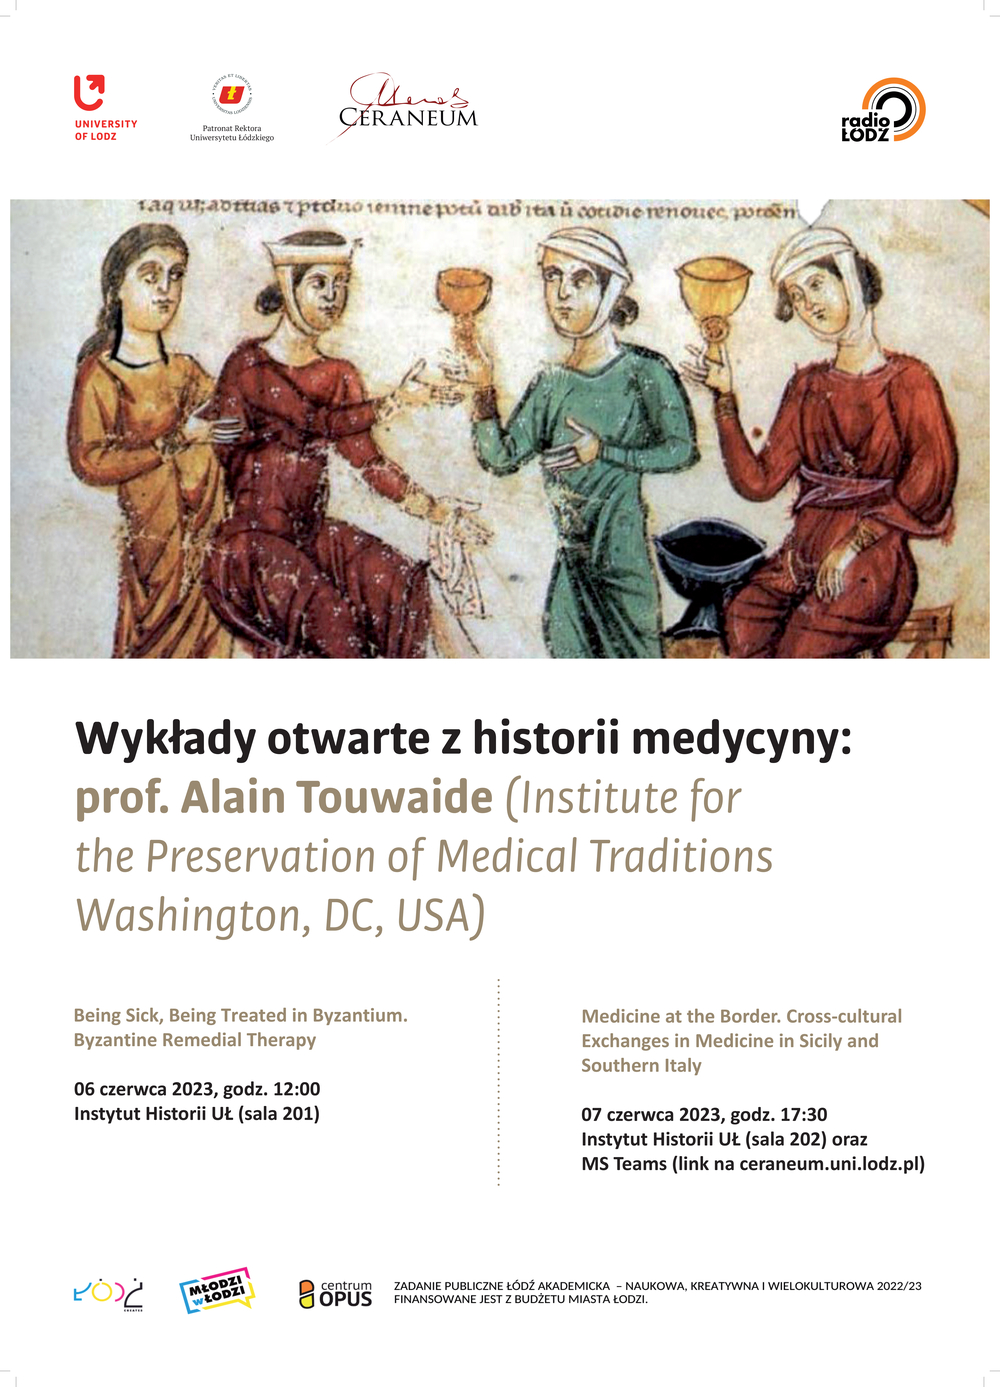 Plakat promujący wykłady prof. Alain Touwaide (Institute for the Preservation of Medical Traditions Washington, DC, USA)